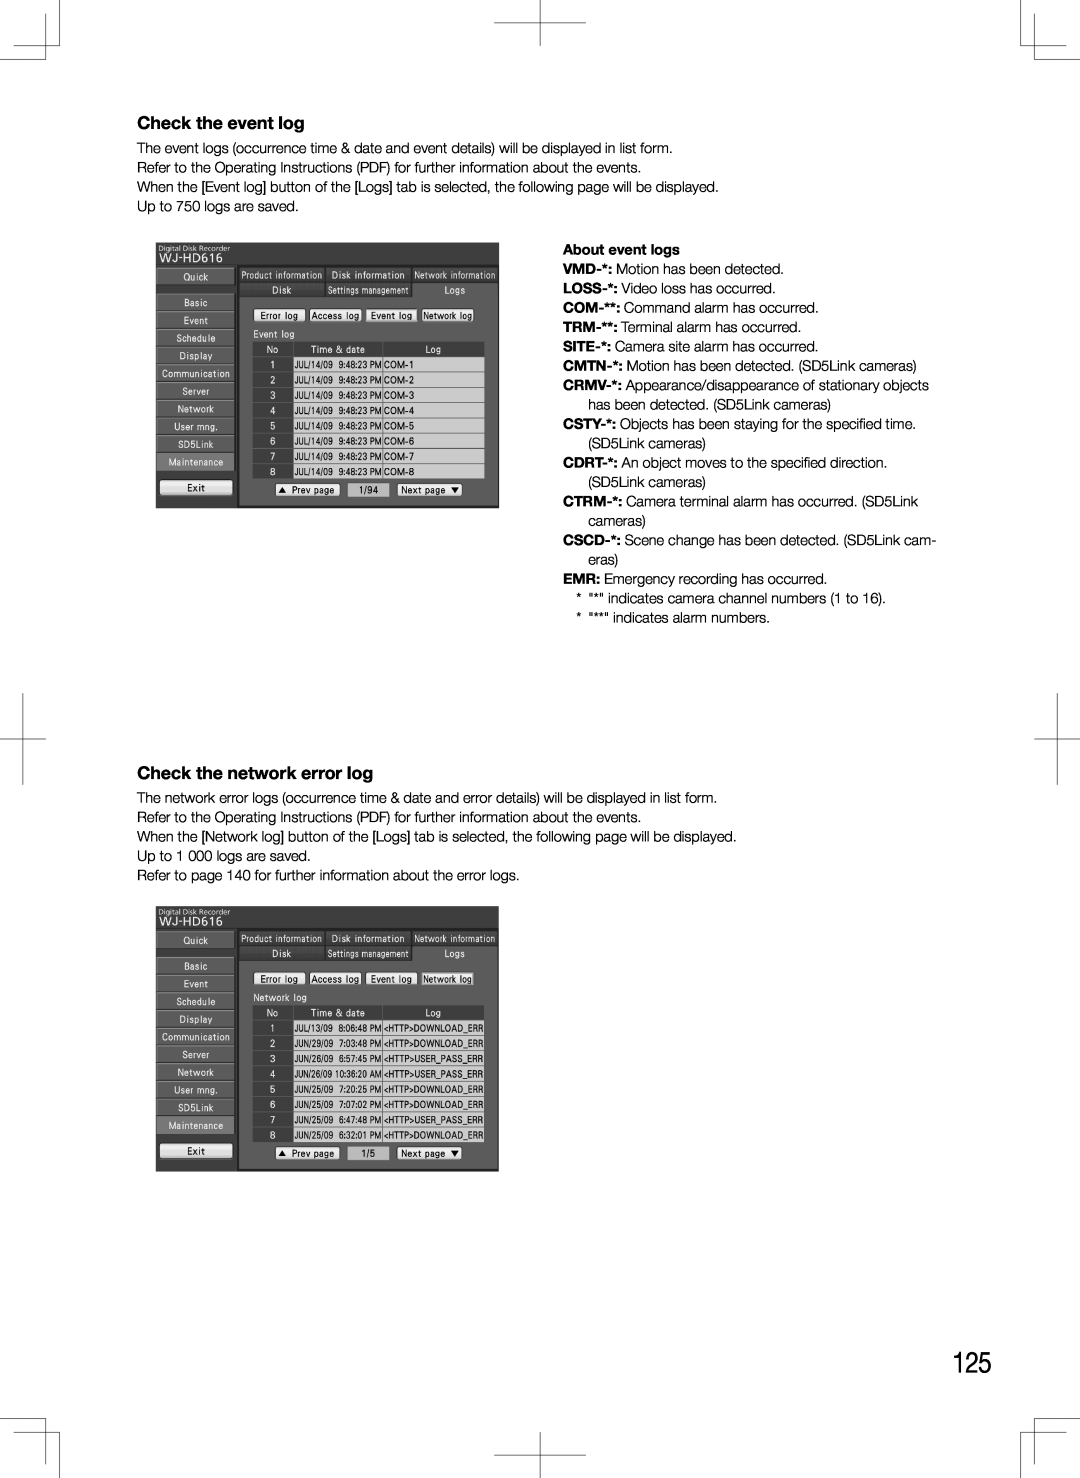 Panasonic WJ-HD616K, WJ-HD716K manual Check the event log, Check the network error log, About event logs 